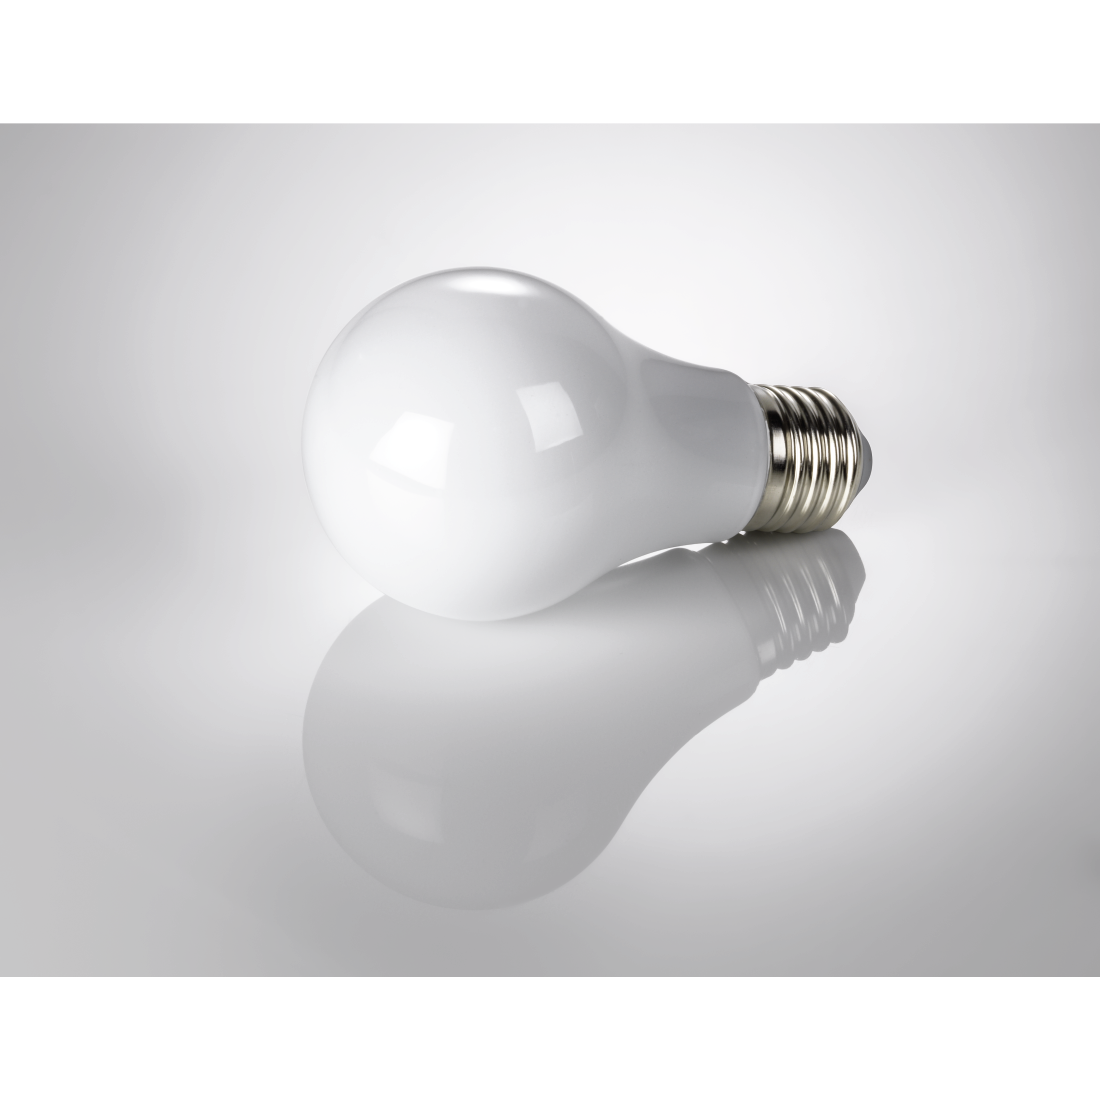 abx3 Druckfähige Abbildung 3 - Xavax, LED-Lampe, E27, 630lm ersetzt 50W, Glühlampe, Warmweiß, Vollglas